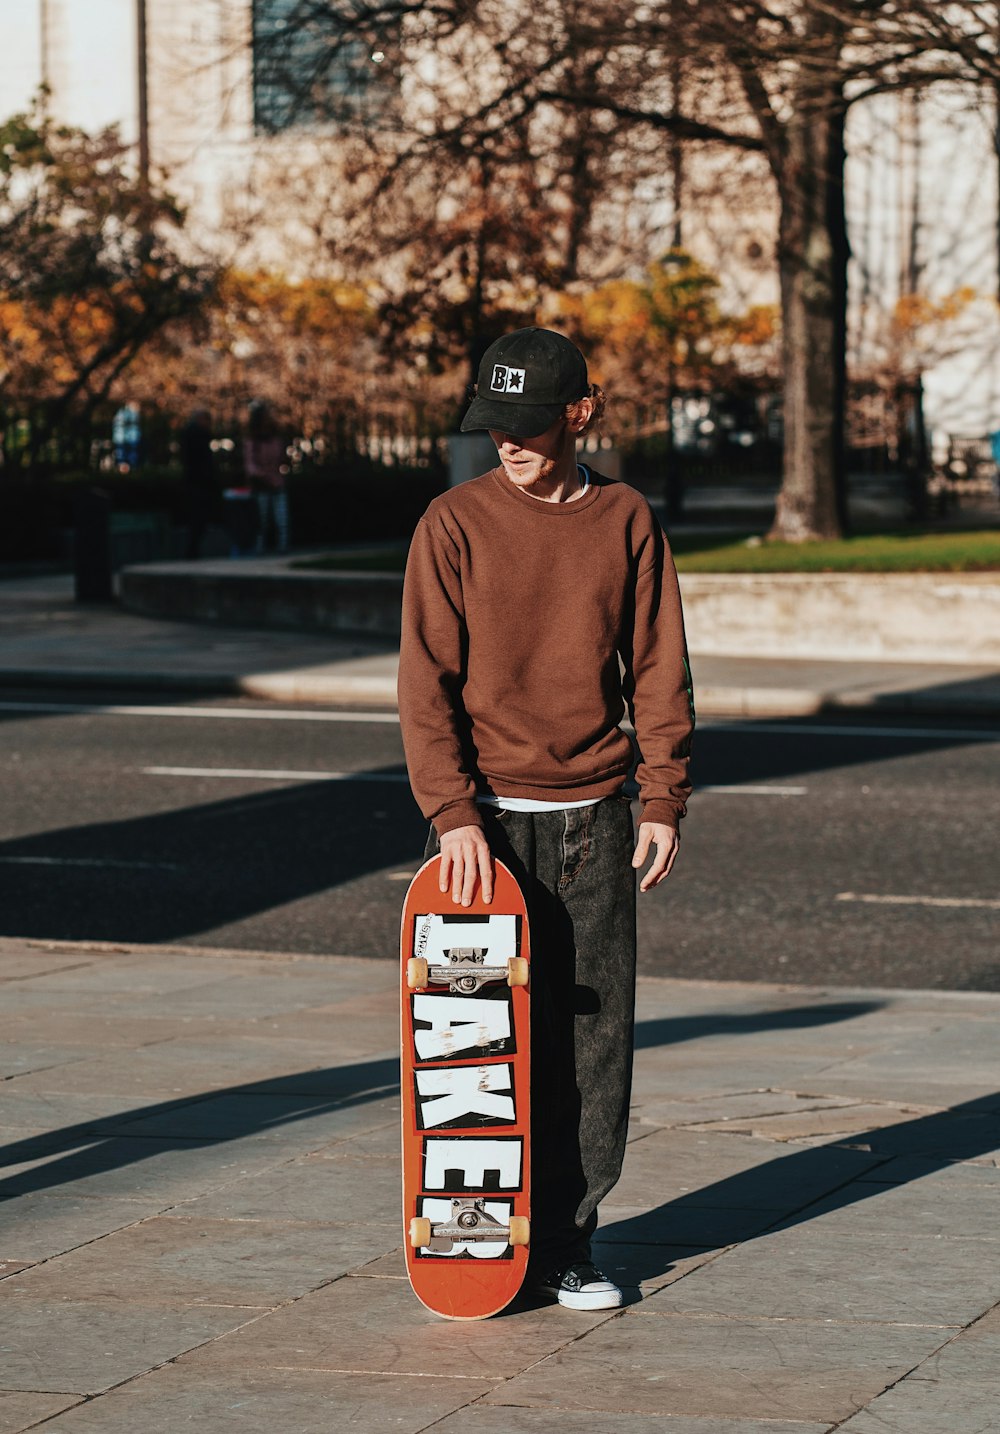 a young man holding a skateboard on a sidewalk